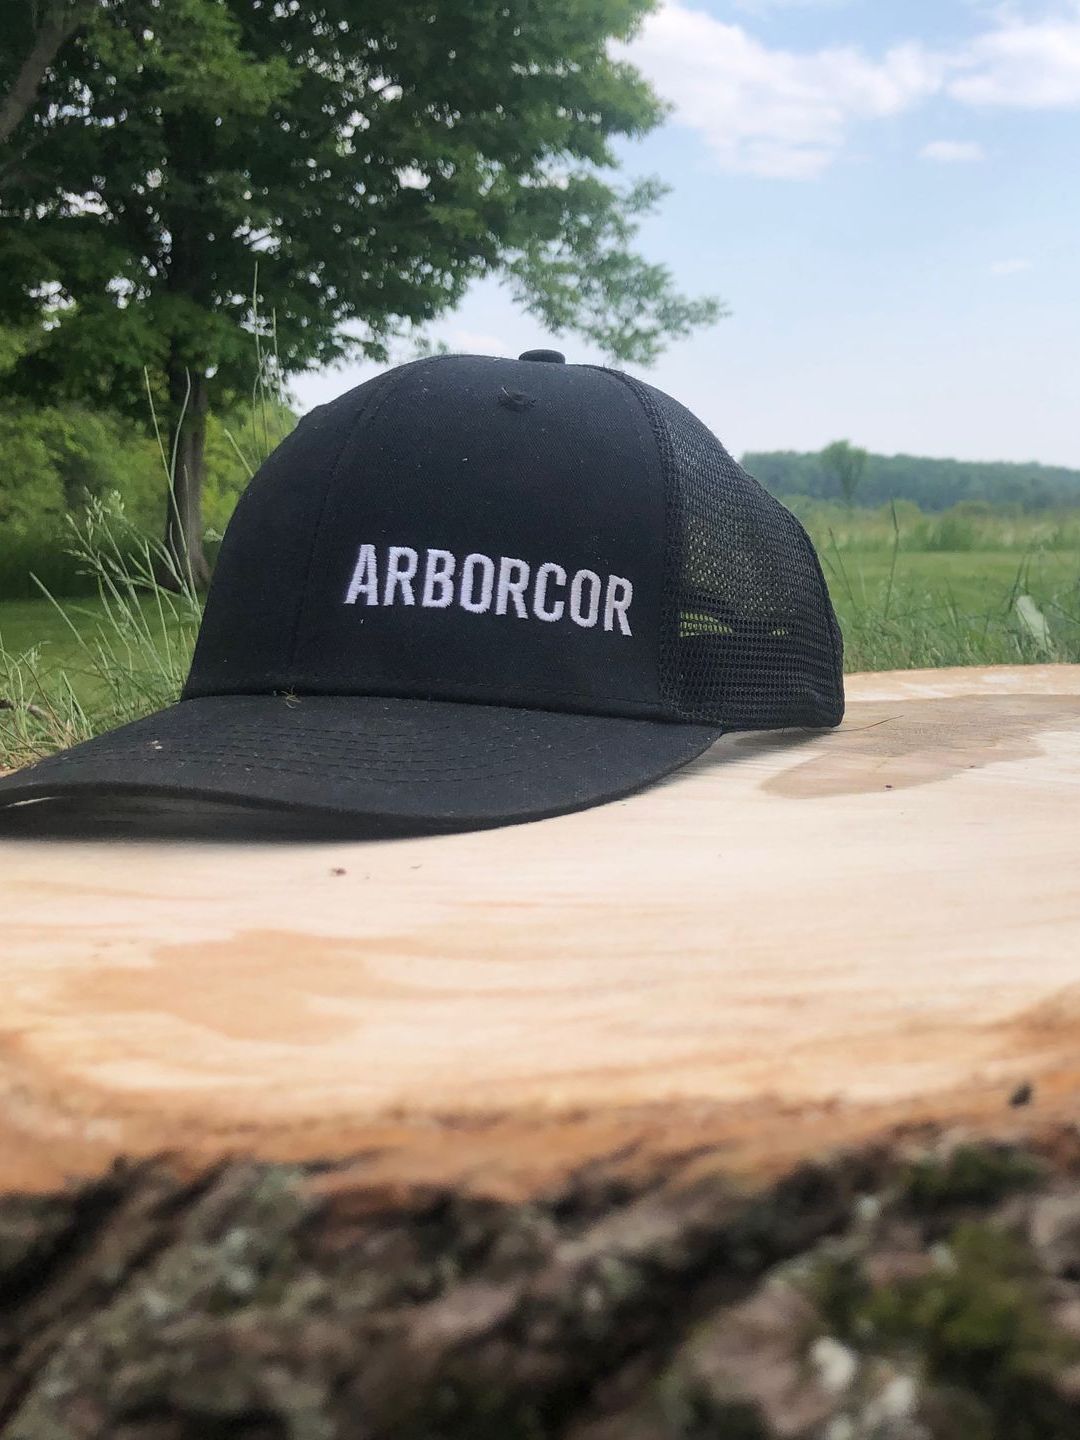 Arborcor provides expert tree services